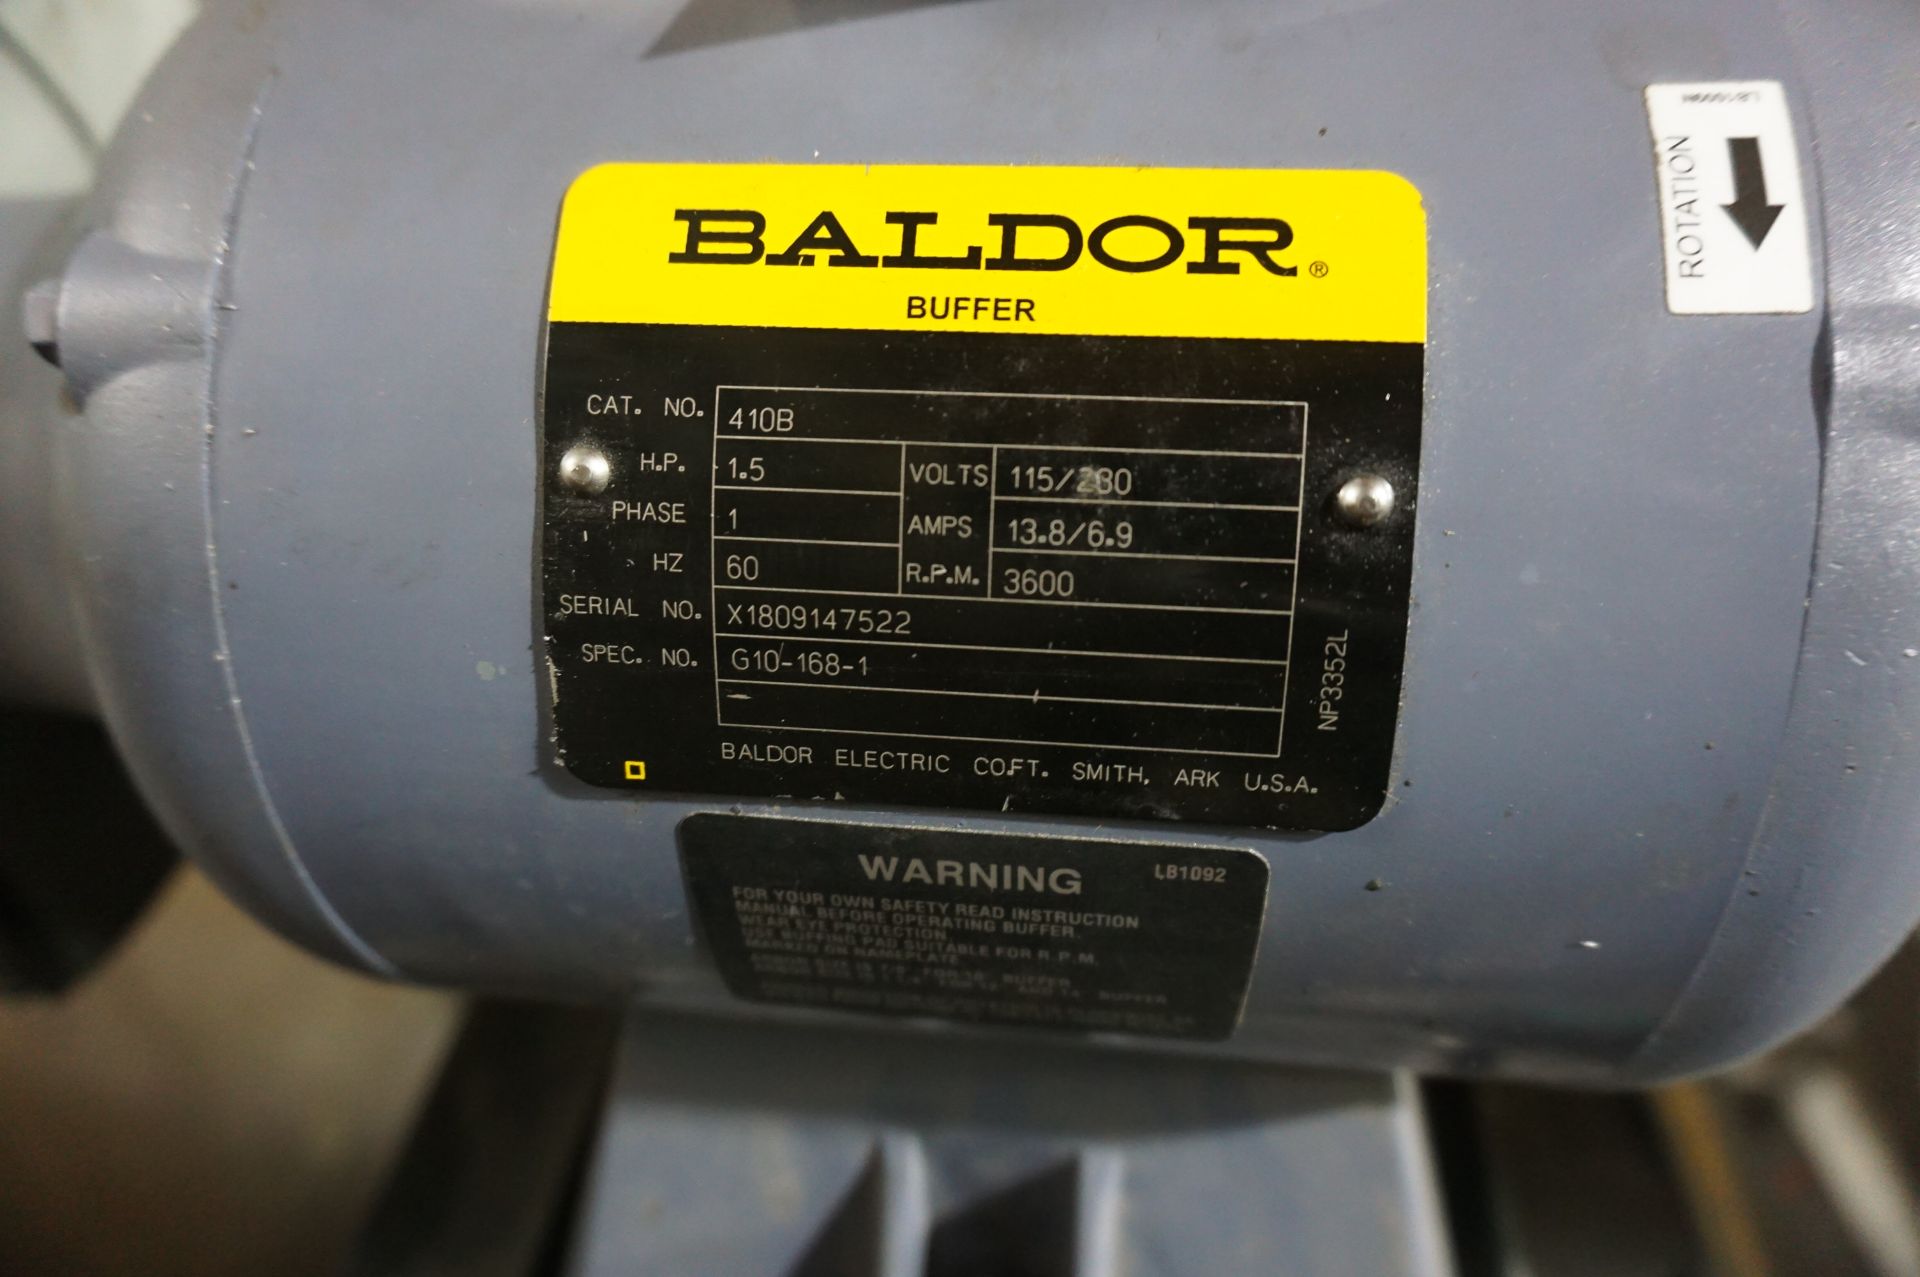 BALDOR PEDESTAL BUFFER, CATALOG 410B, 1.5 HP, 3600 RPM, S/N X1809147522, 1 PH, 60 HZ, 150/230, 18. - Image 4 of 4